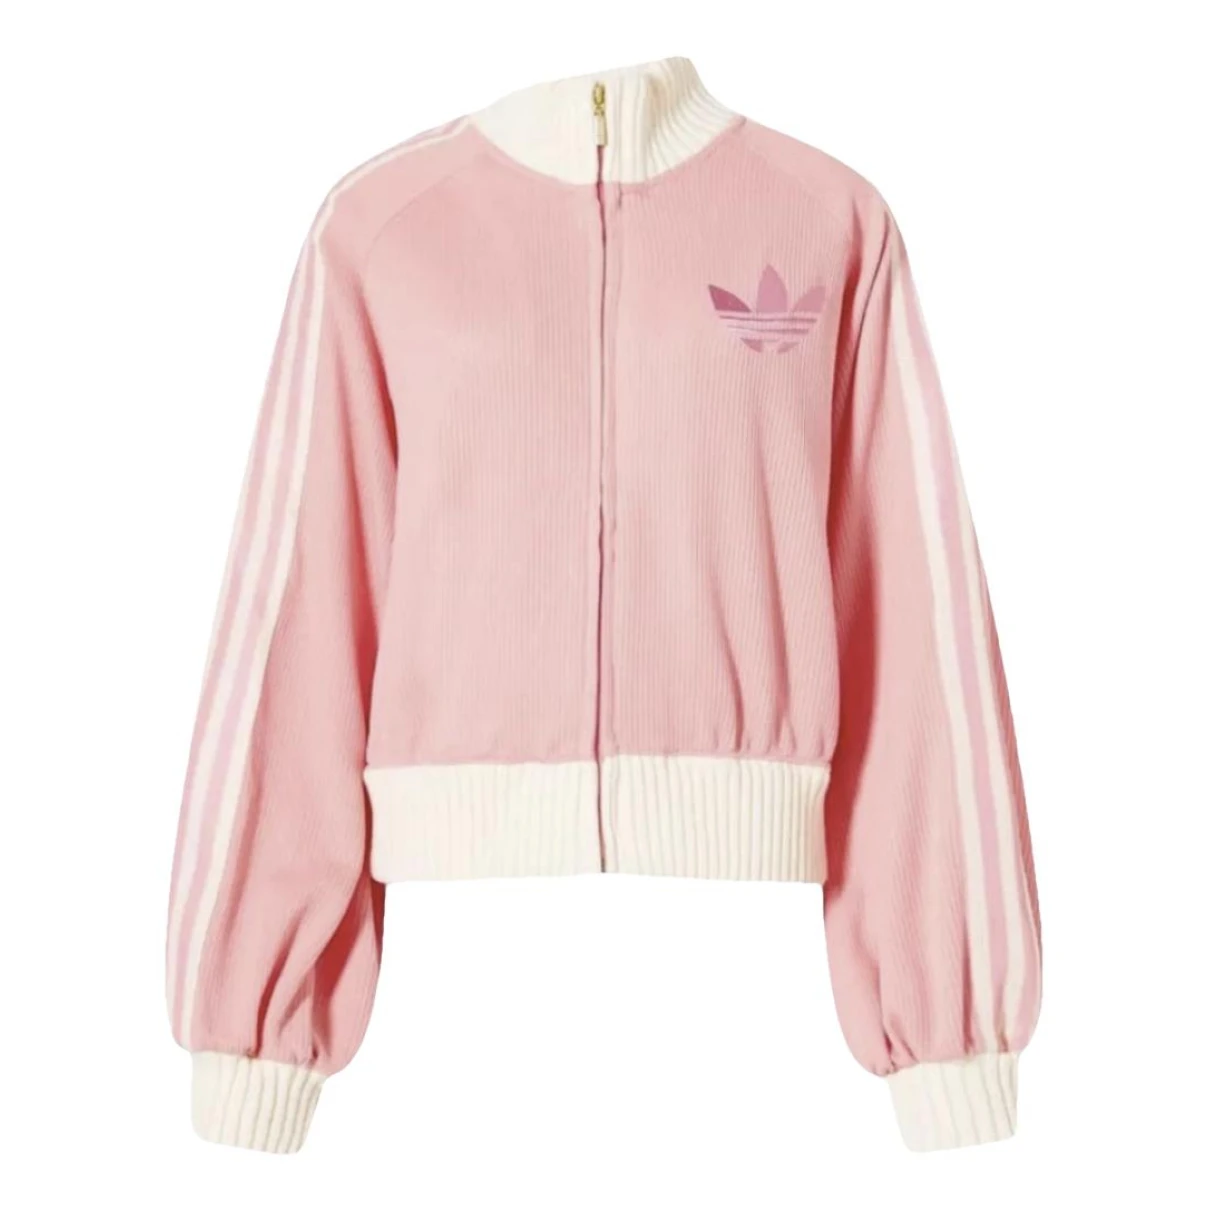 Pre-owned Adidas Originals Jacket In Pink